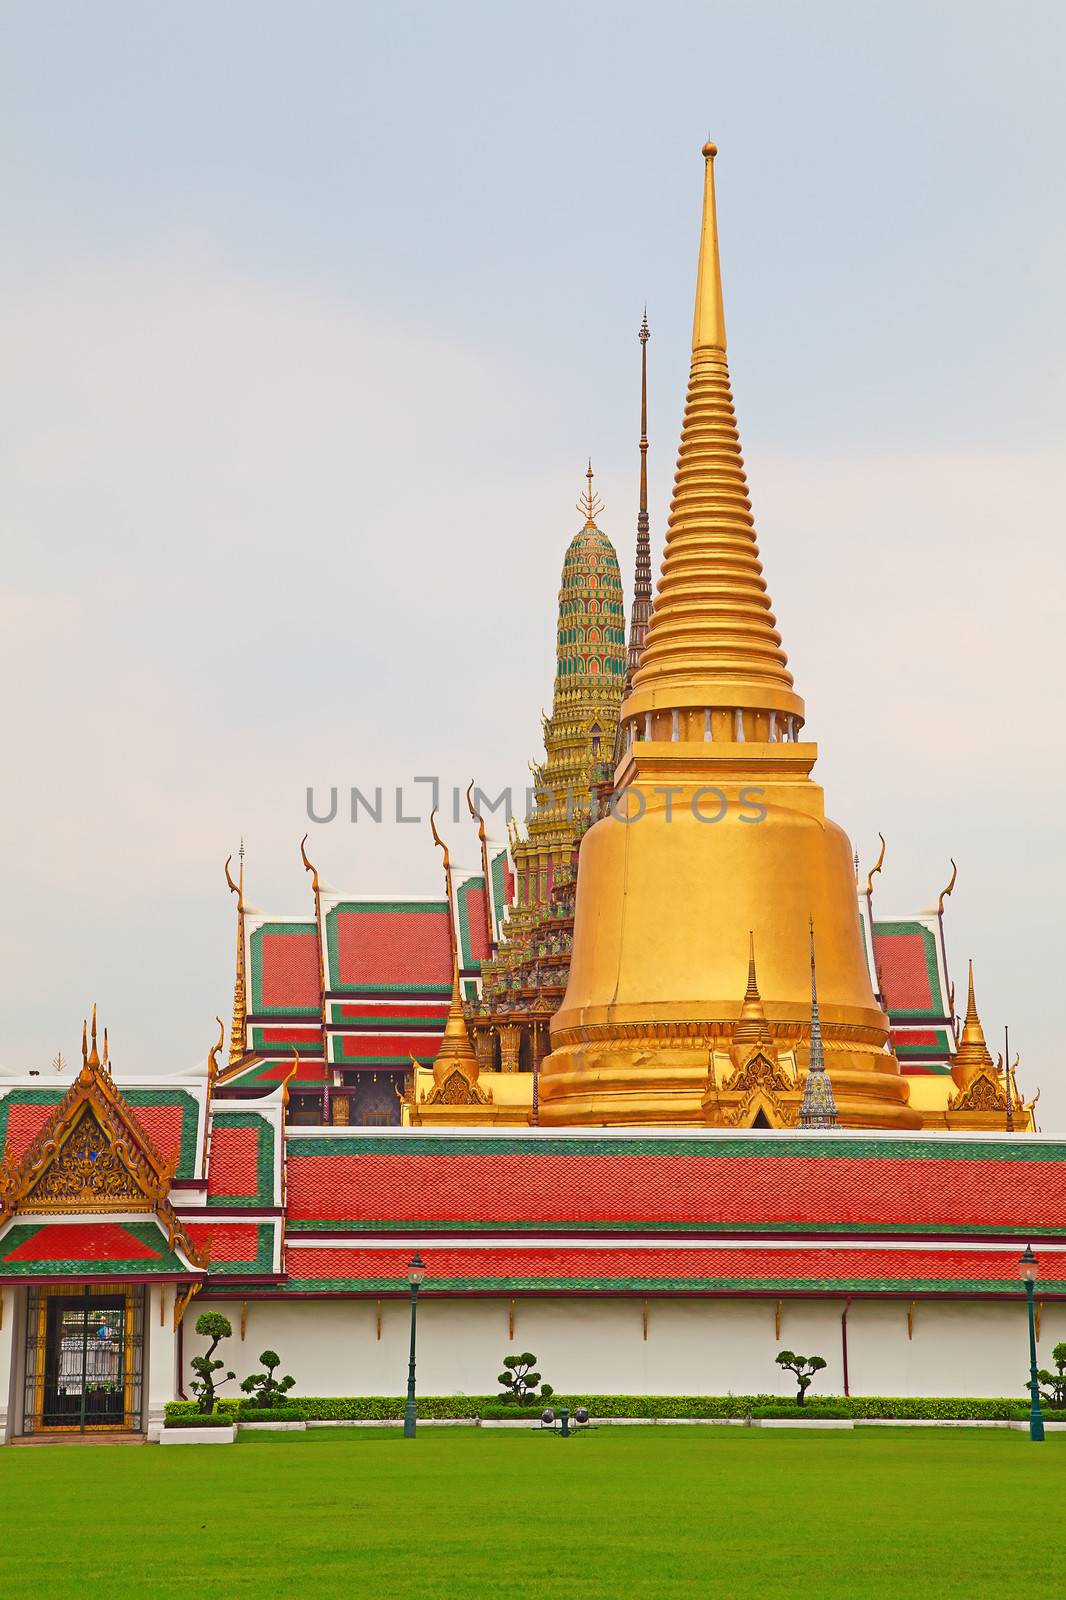 Grand Palace and Temple of Emerald Buddha by swisshippo